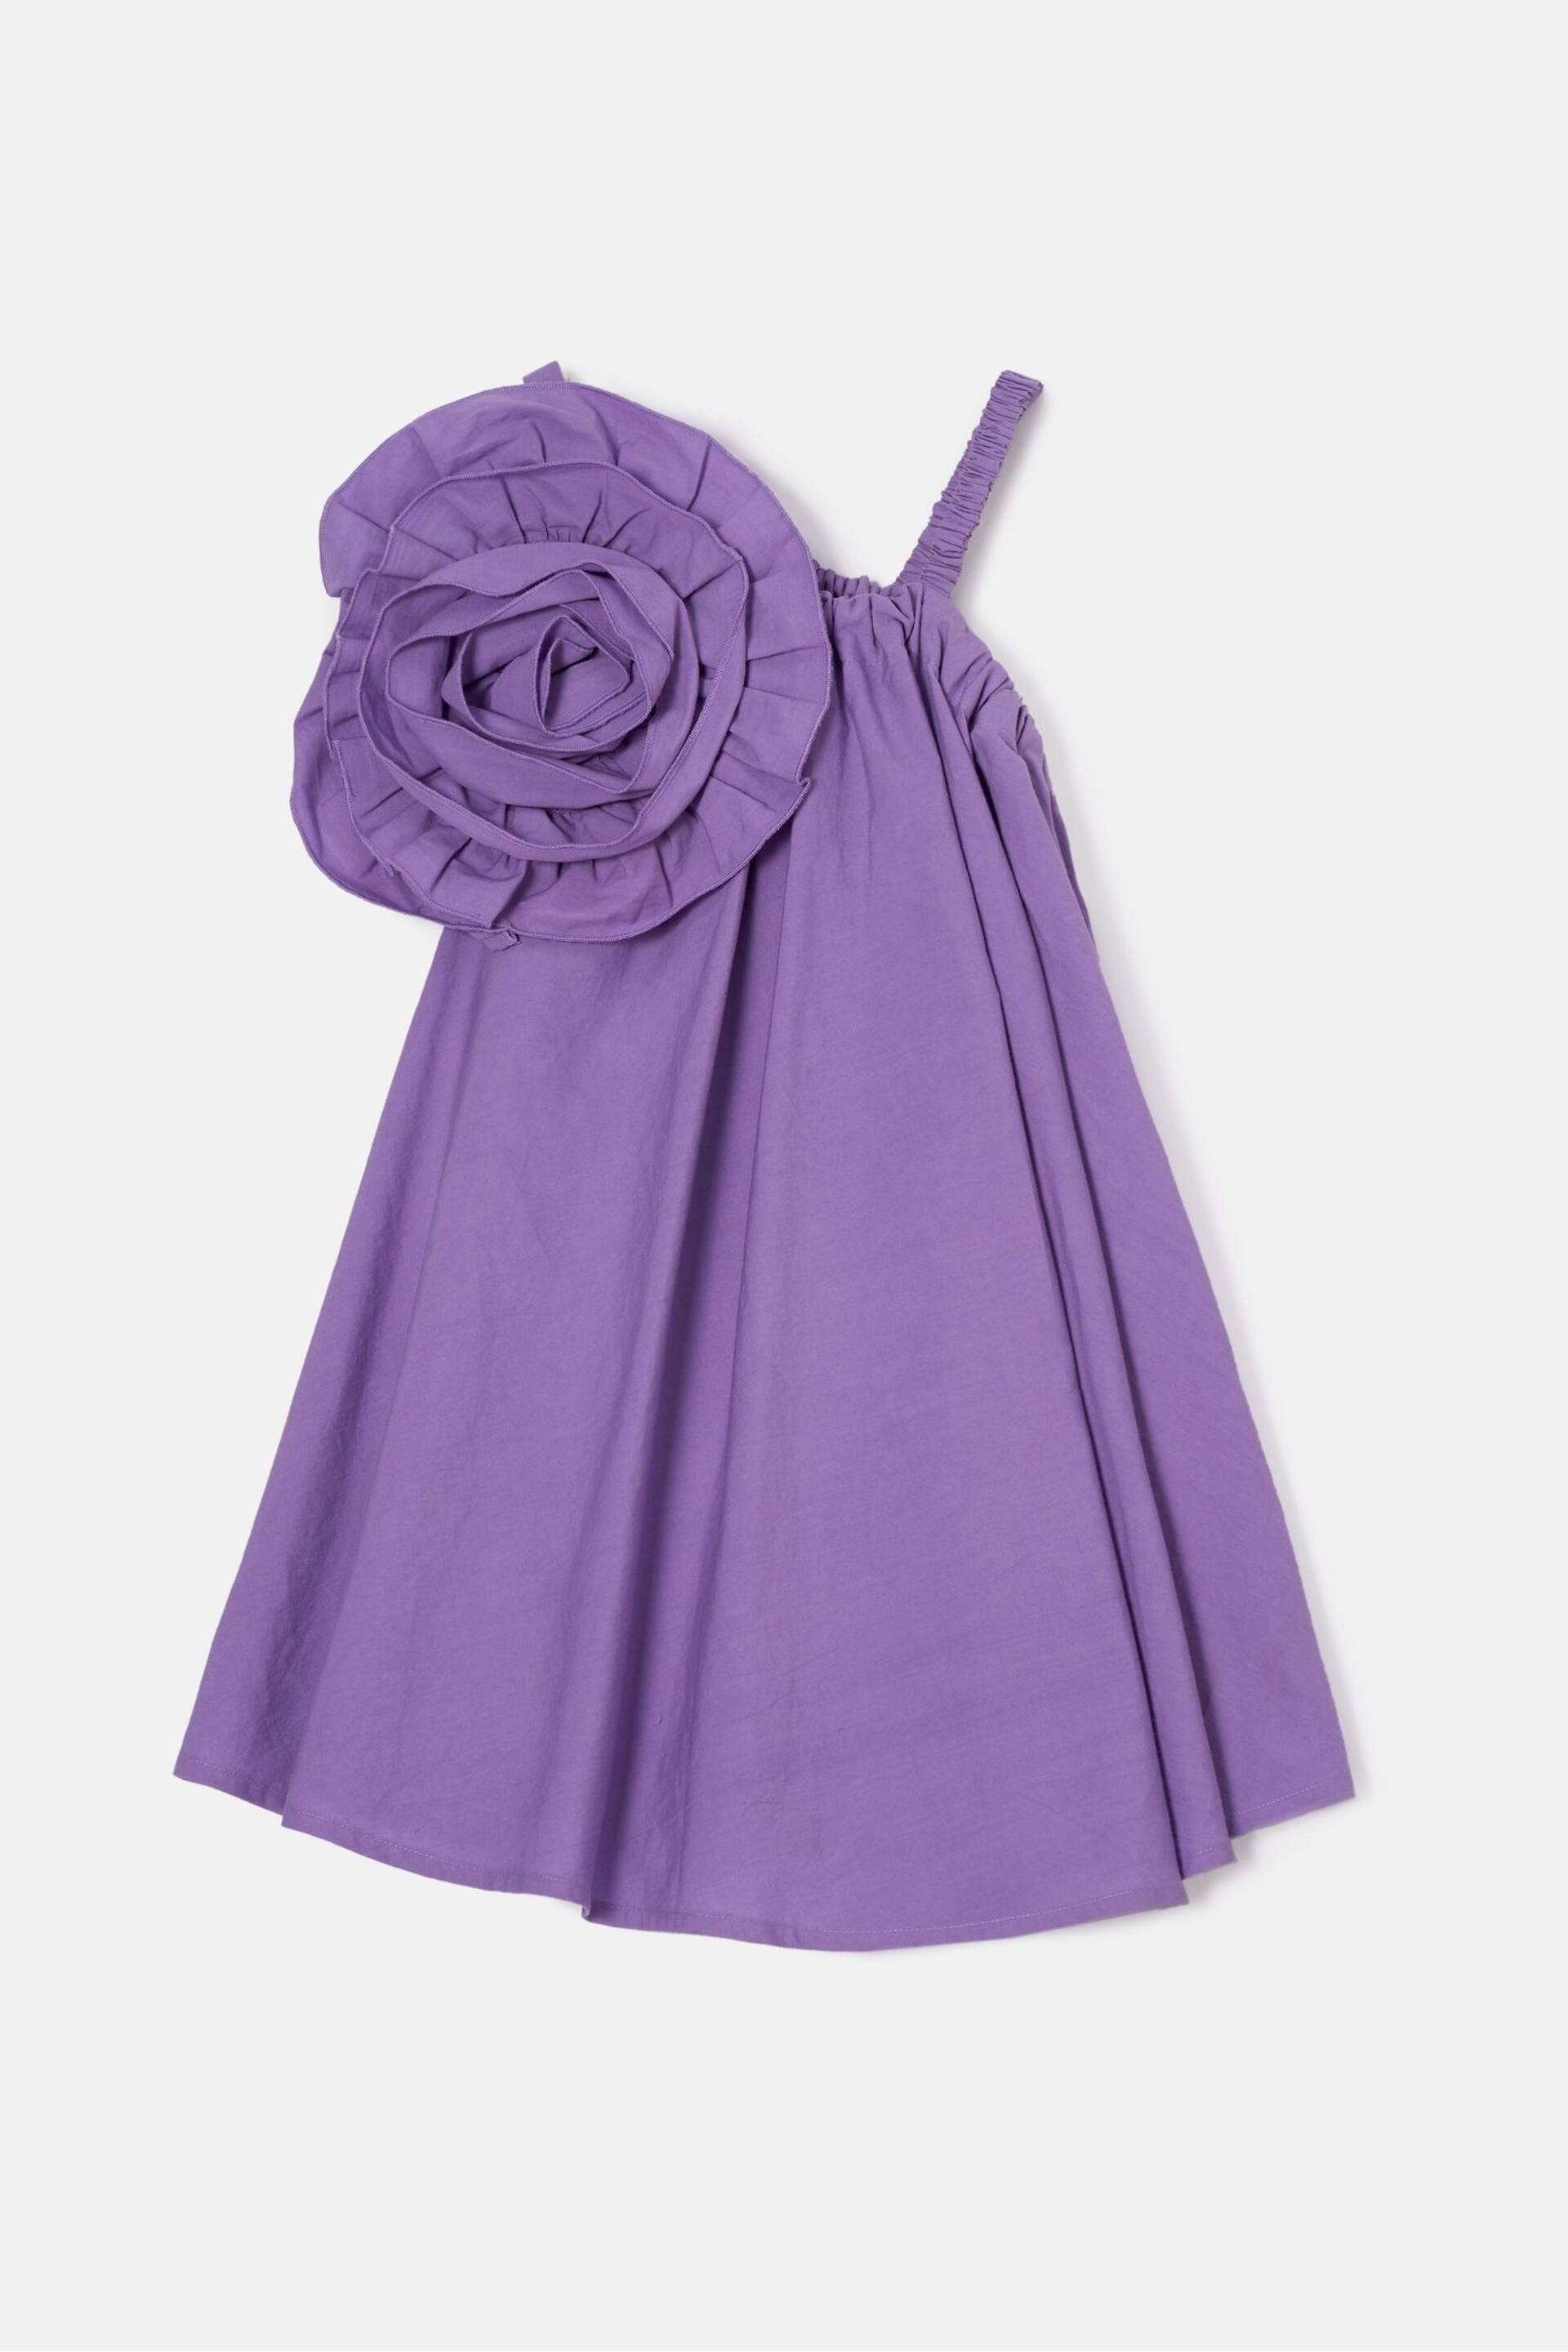 Angel & Rocket Purple Carrie Corsage Swing Dress - Image 4 of 6